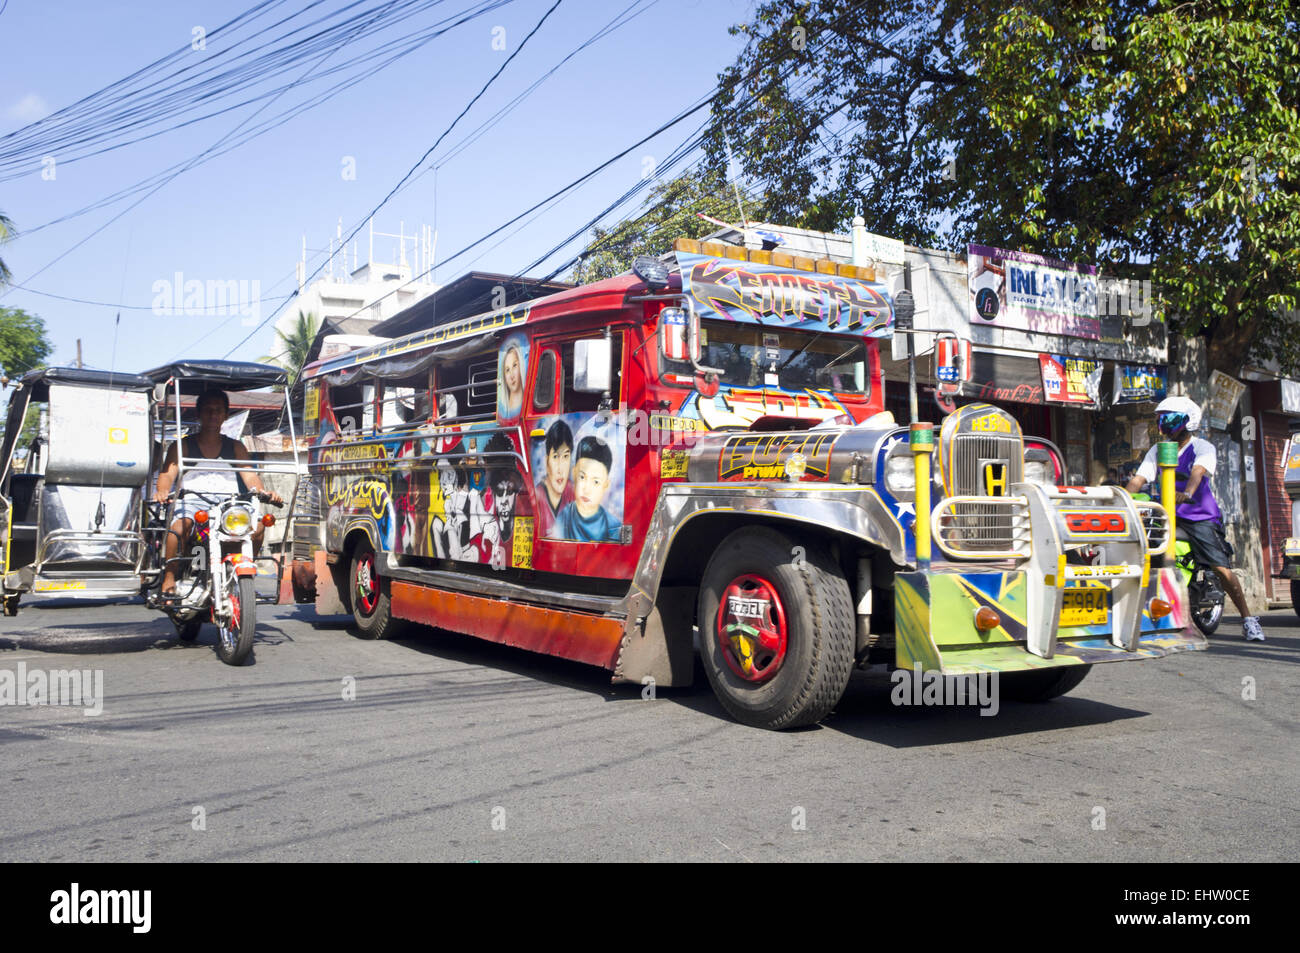 jeepney in philippines Stock Photo